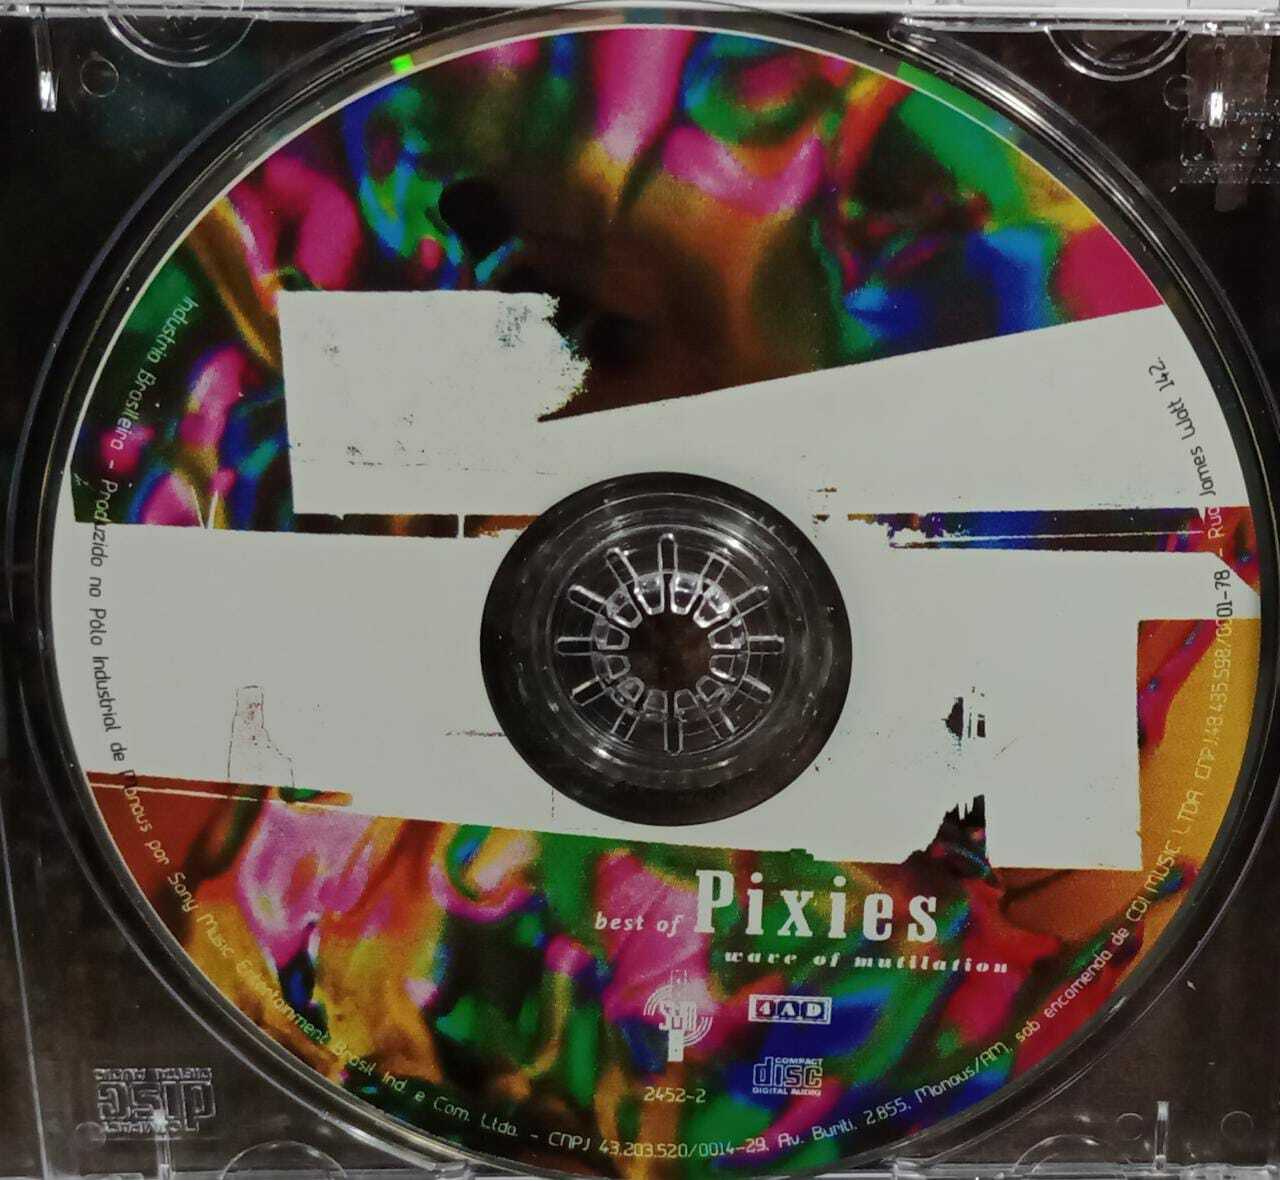 CD - Pixies - Best Of Pixies Wave Of Mutilation